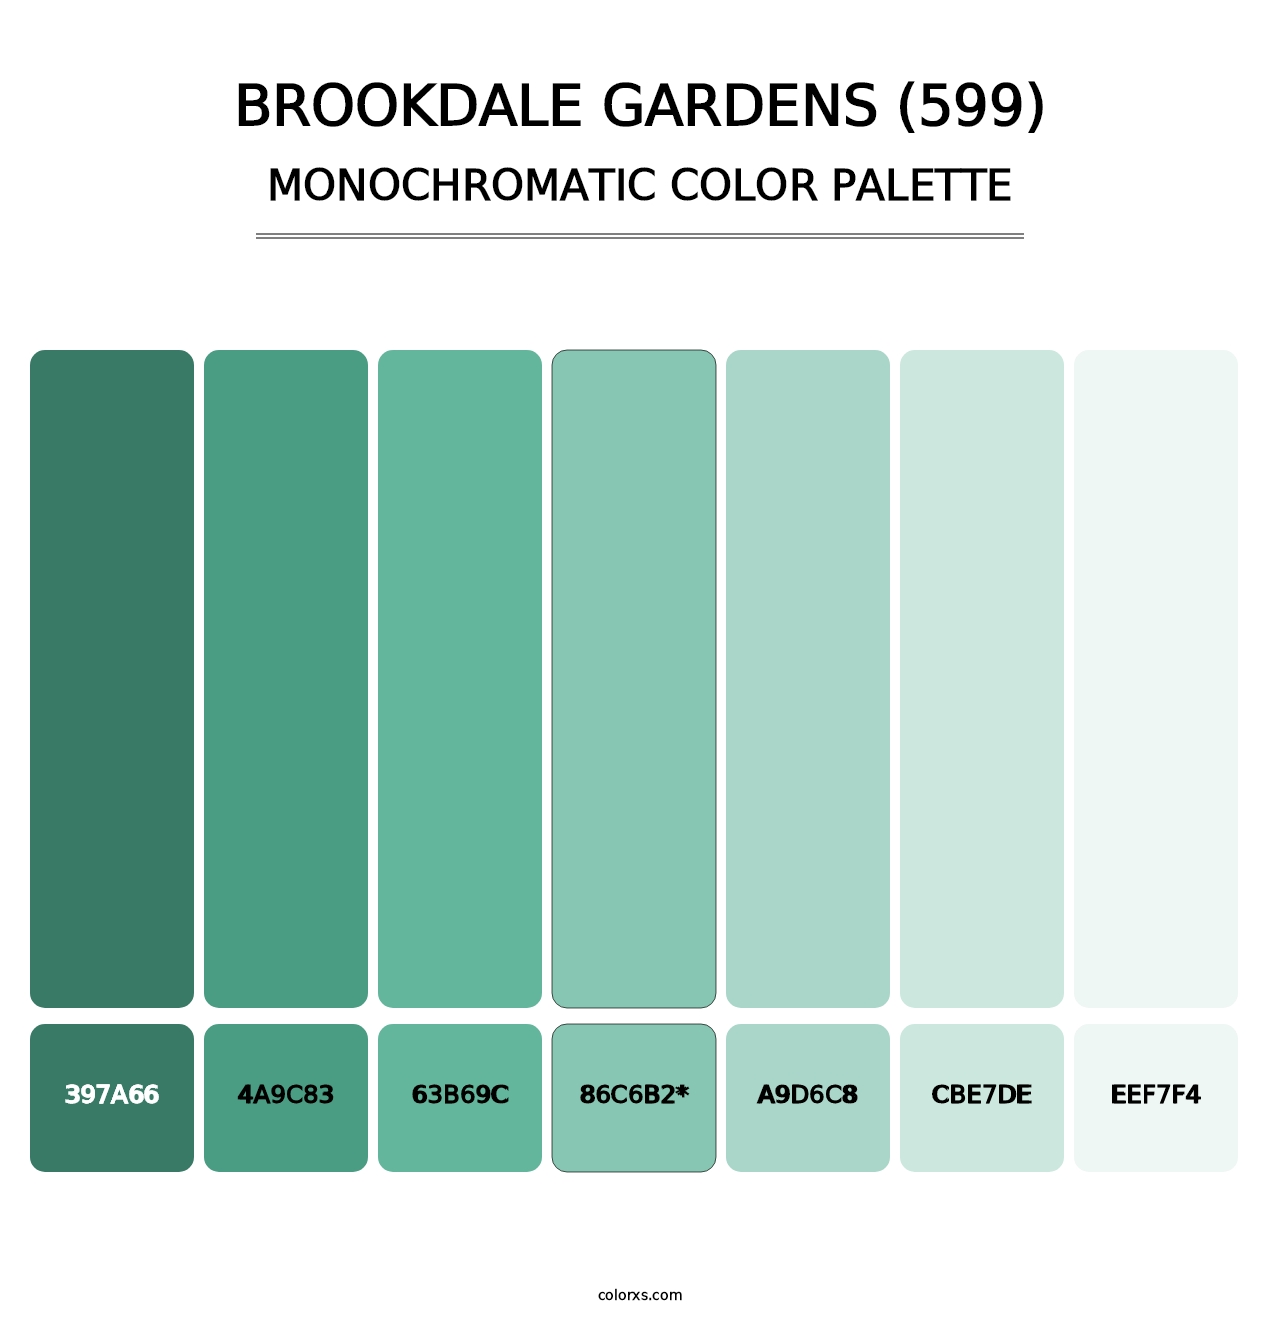 Brookdale Gardens (599) - Monochromatic Color Palette